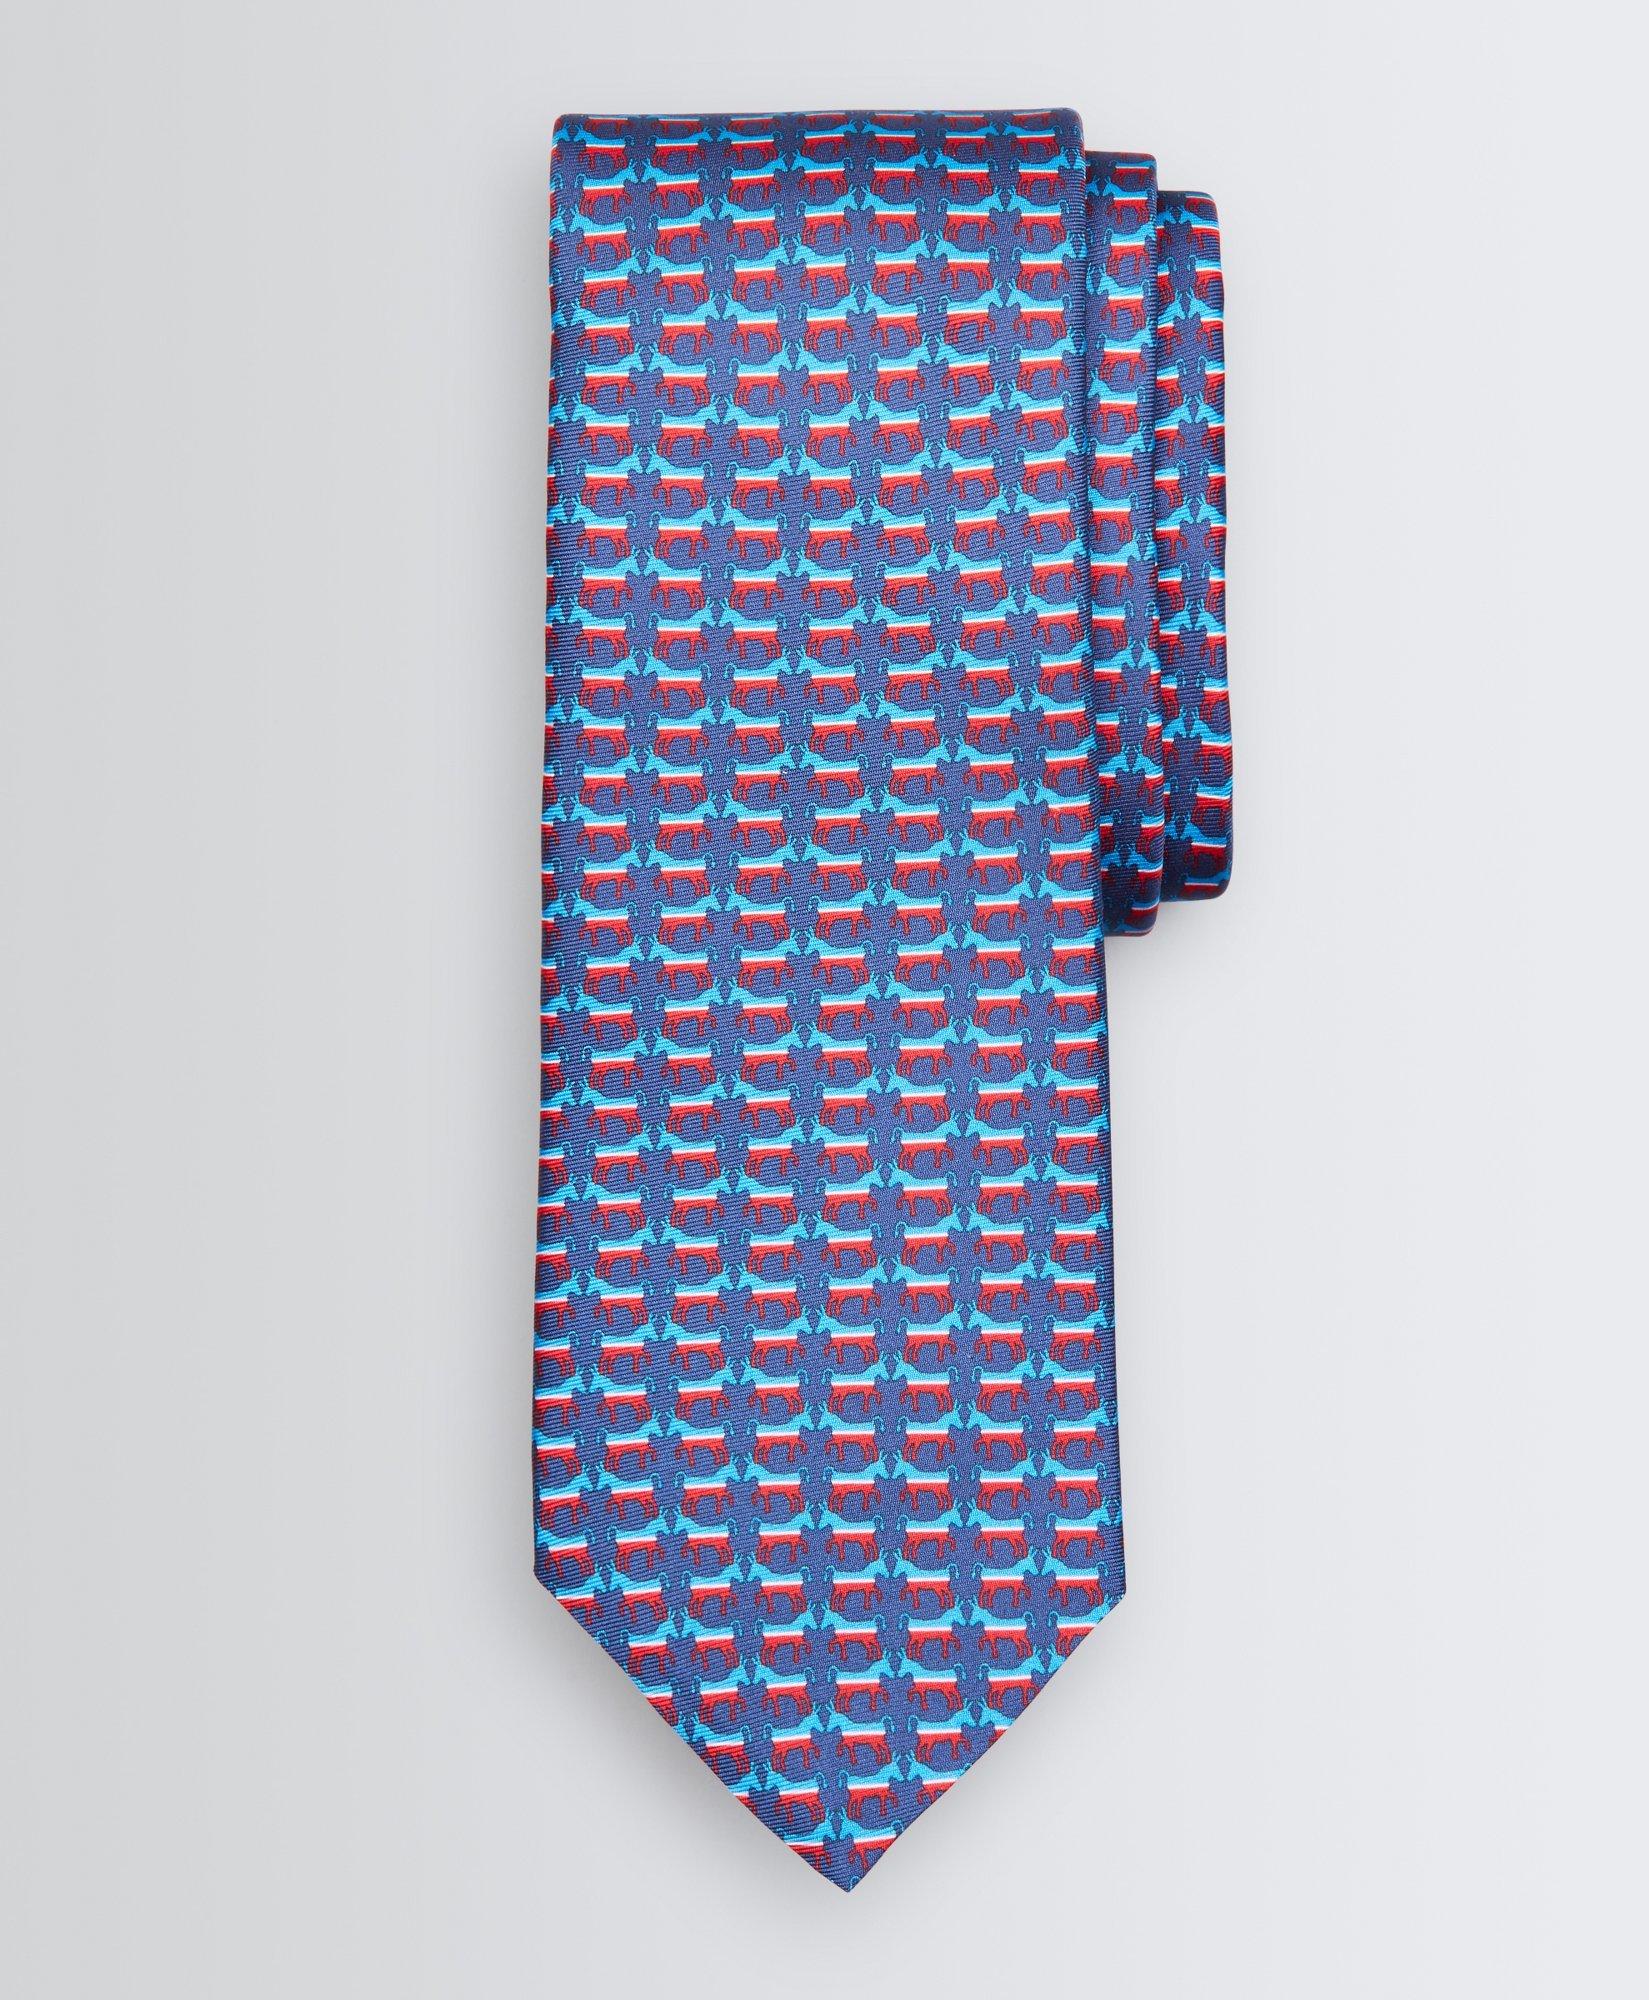 Donkey-Patterned Tie, image 1